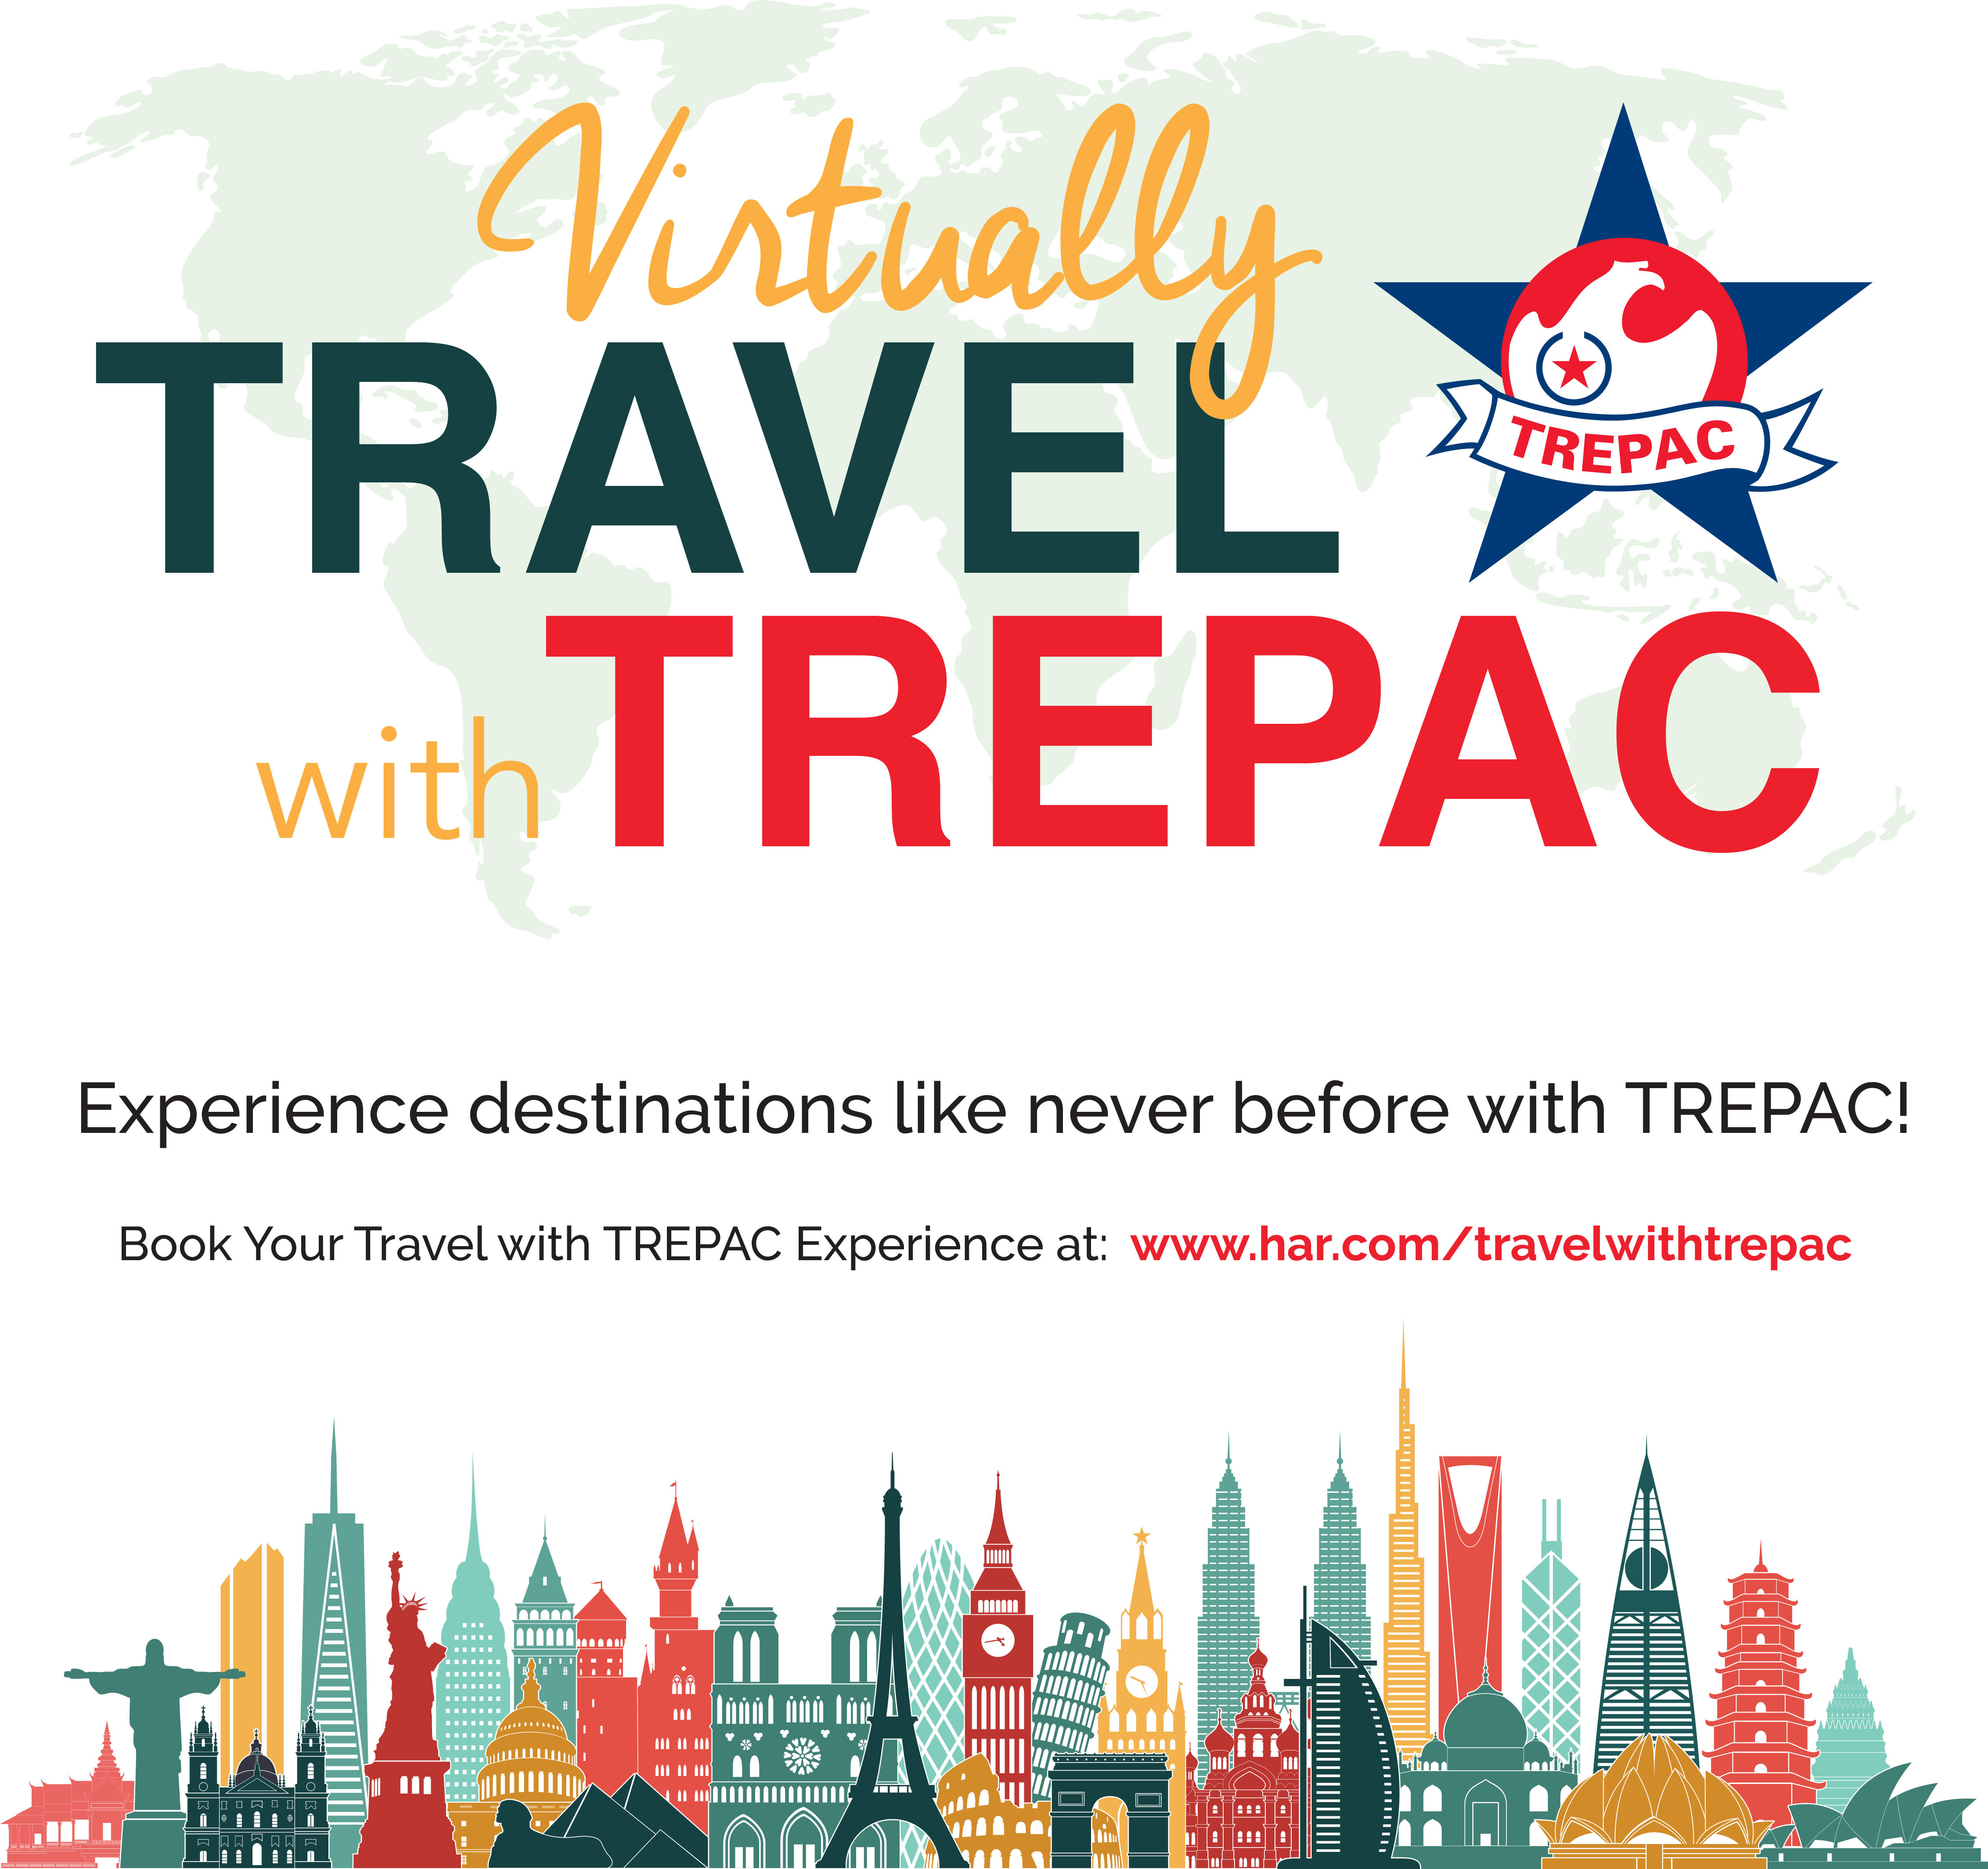 Travel with TREPAC!